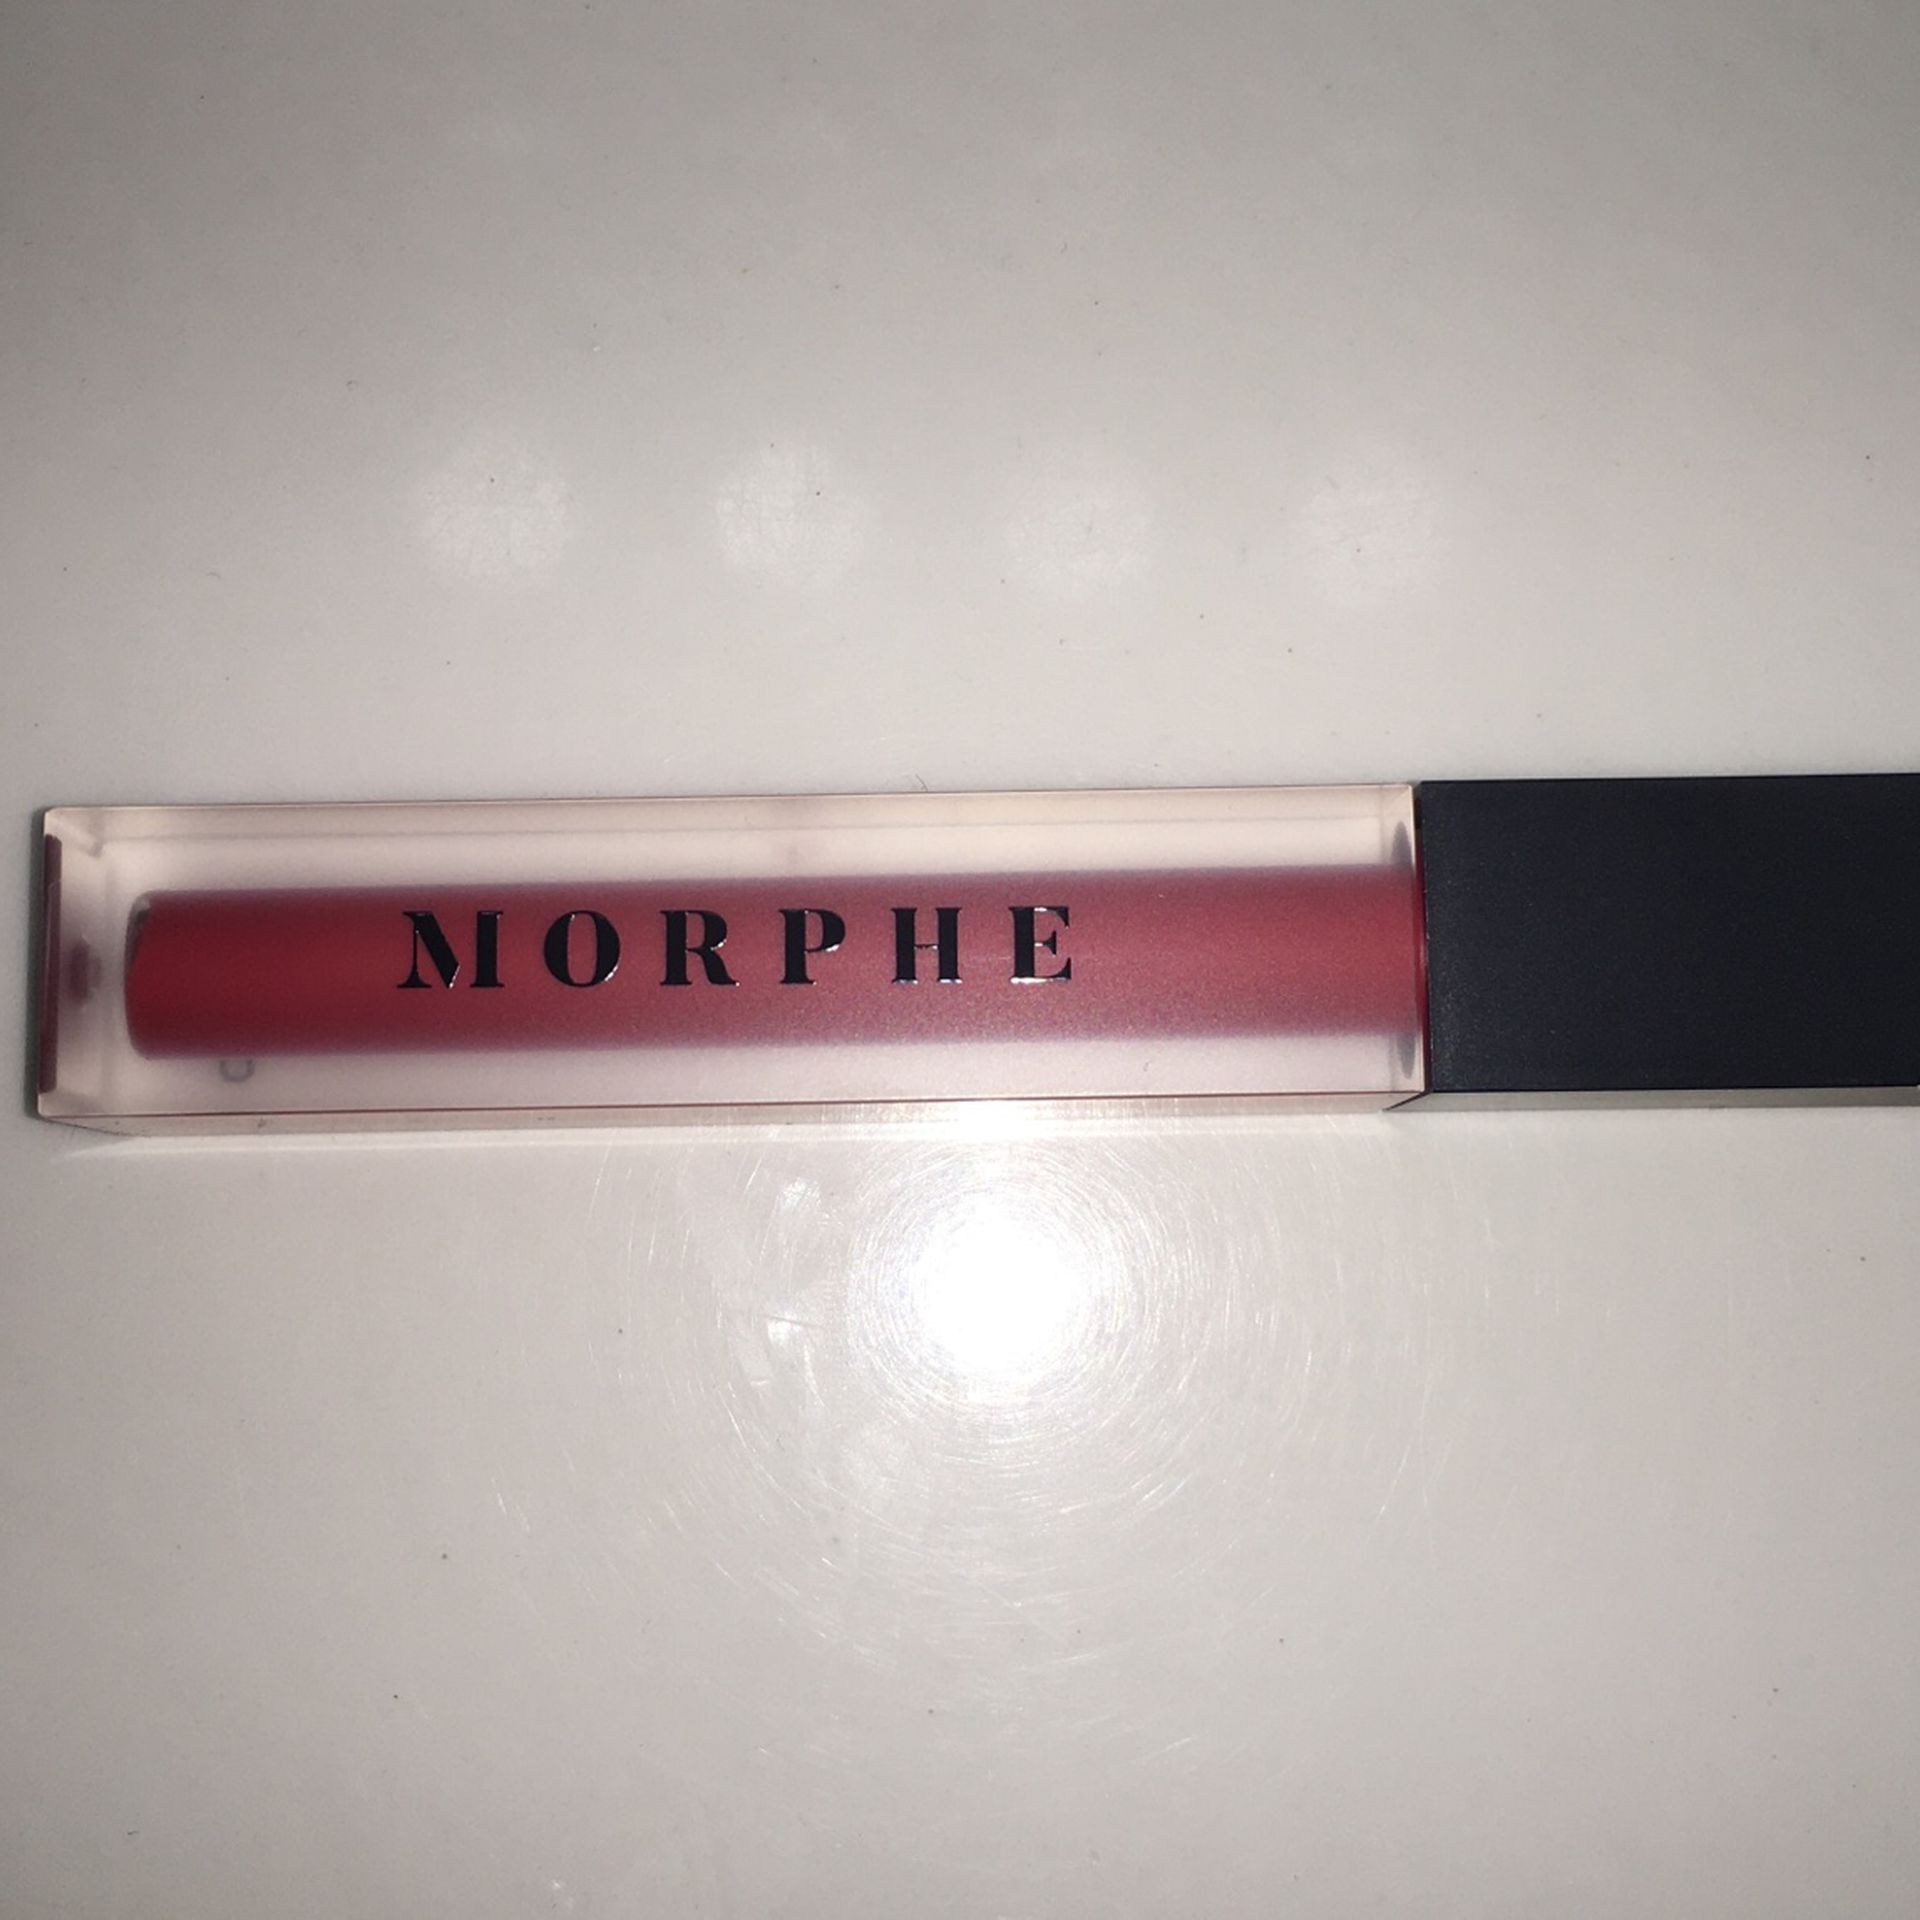 Morphe pallet and Brushes, lipstick